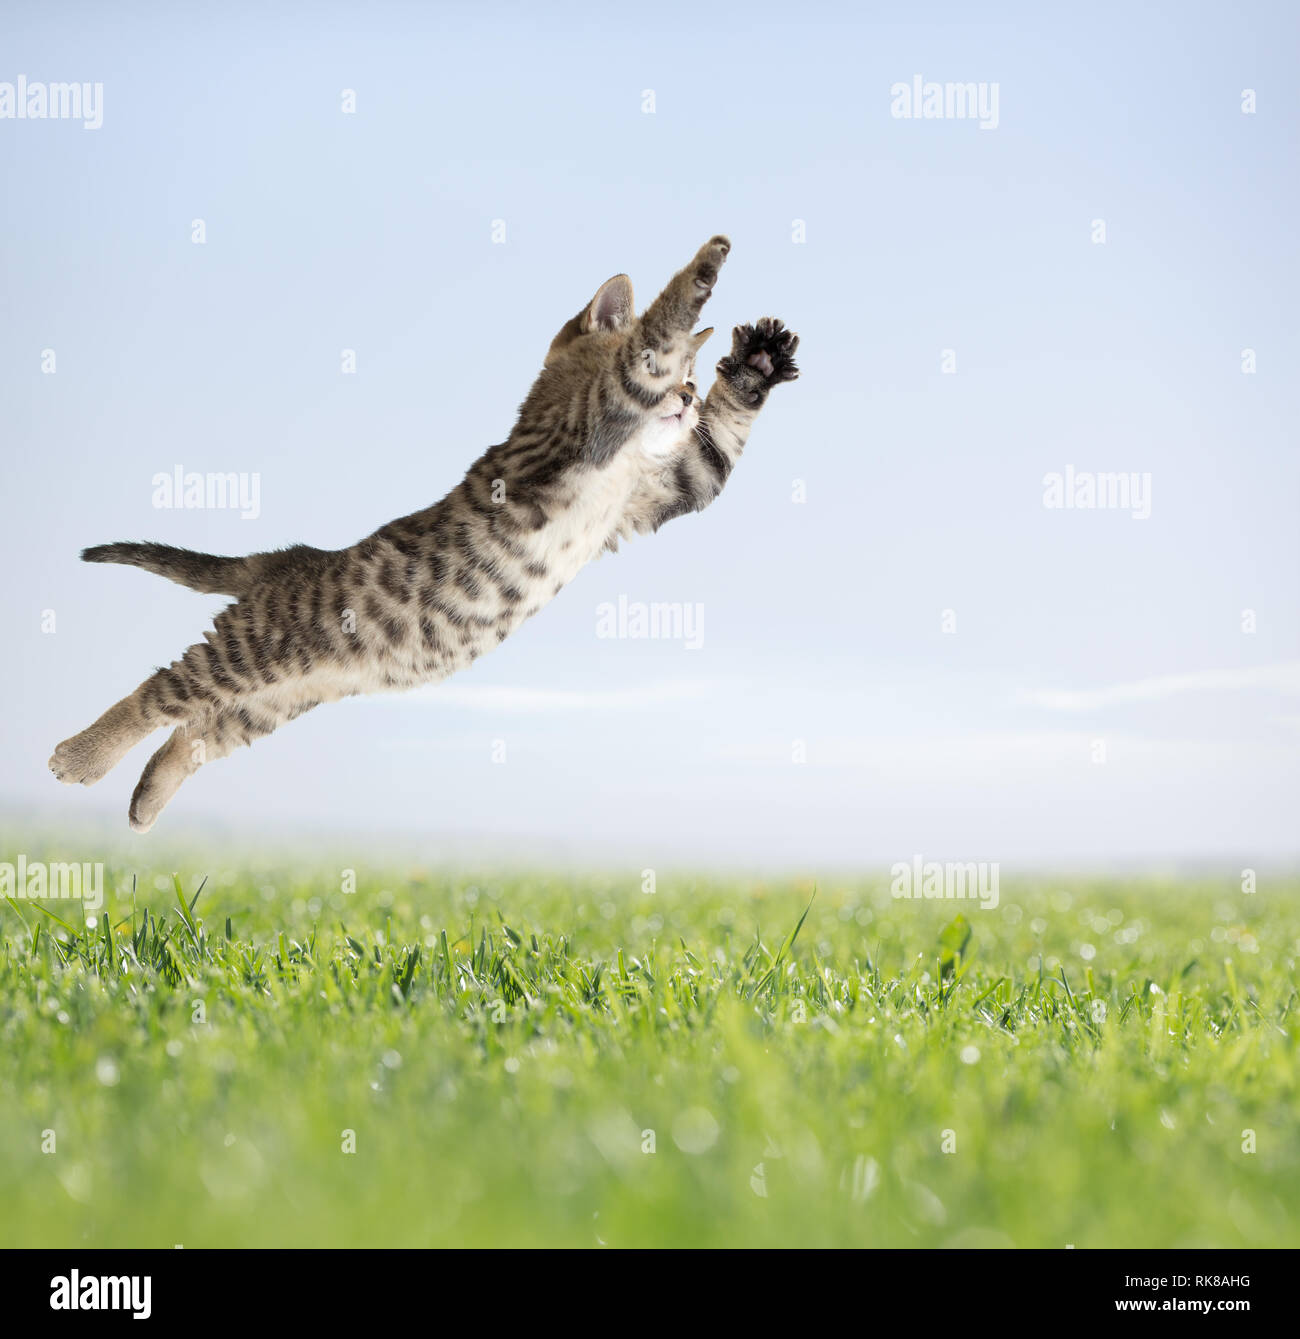 Katze im grünen Gras springen Stockfoto